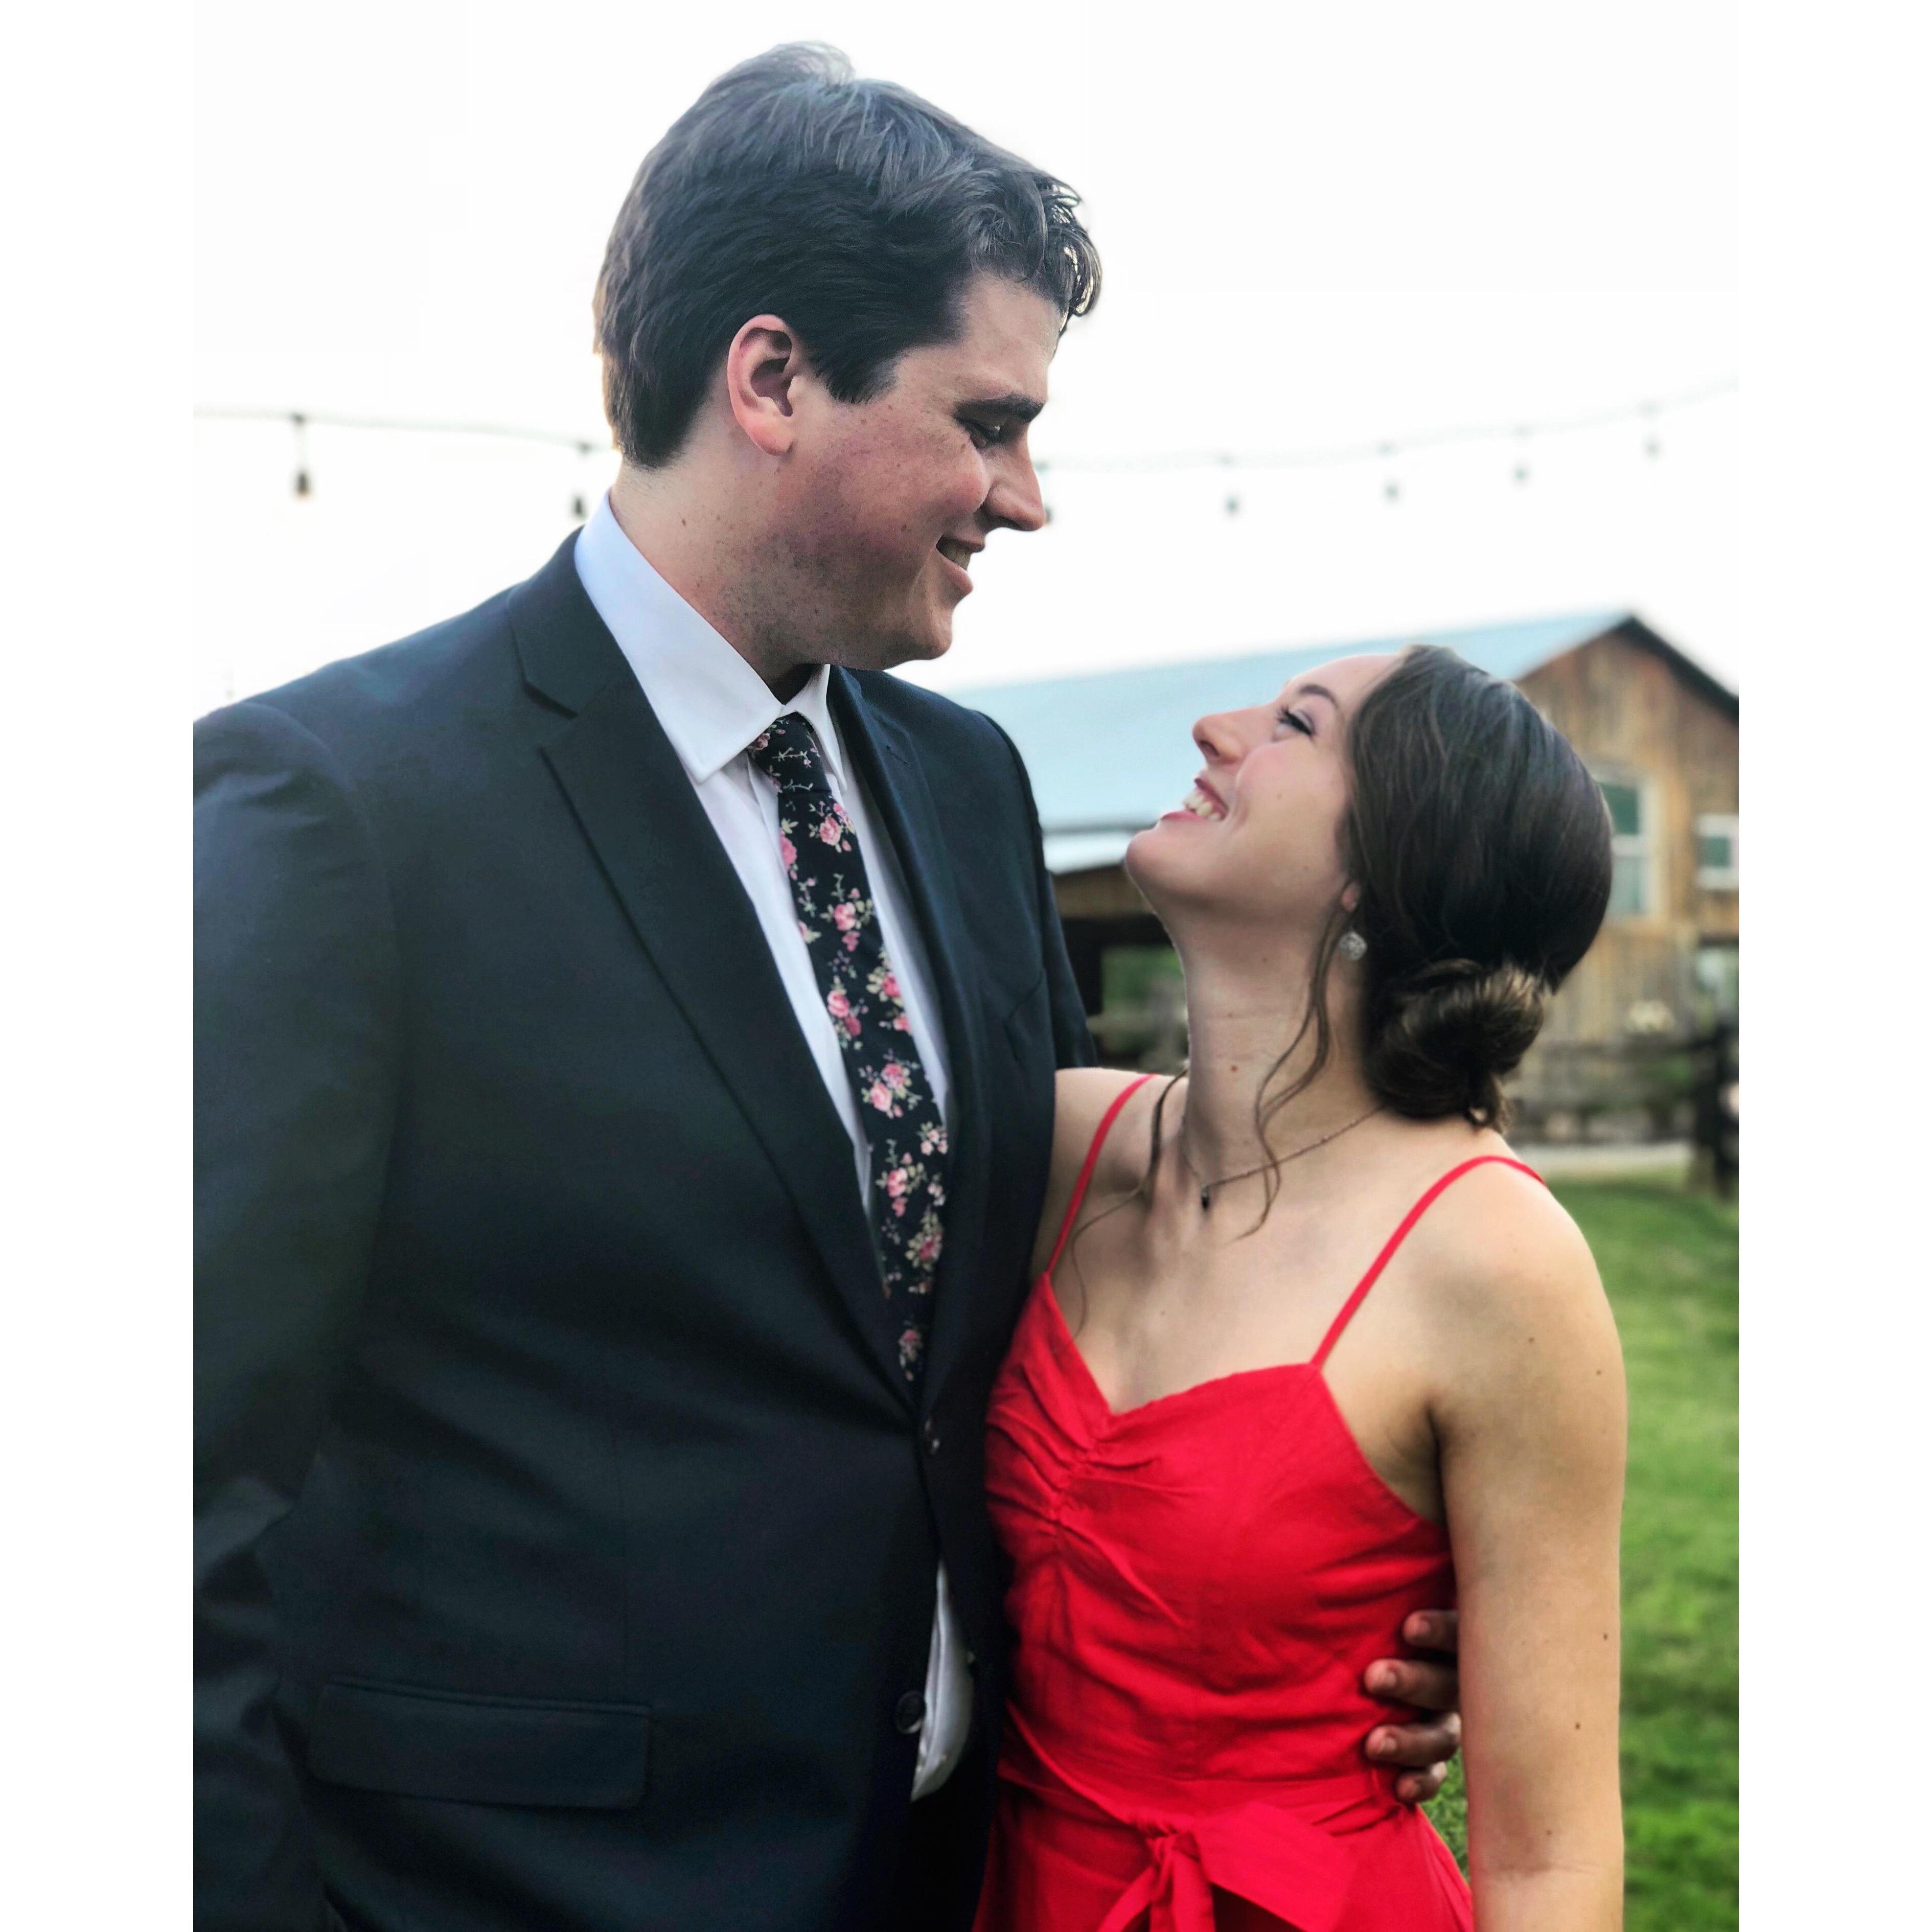 At a friend's wedding 2018